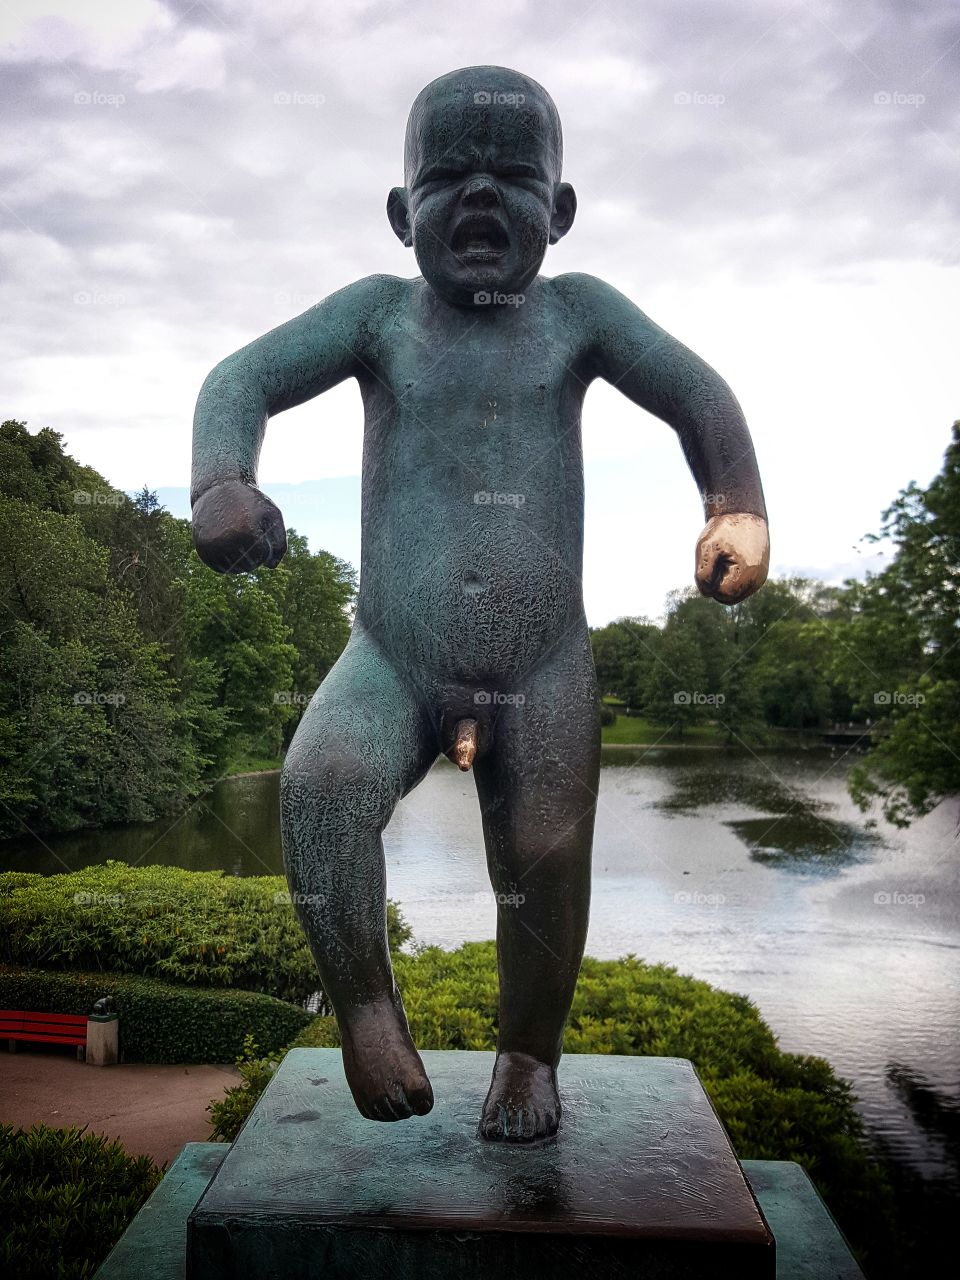 The Vigeland Park, Oslo